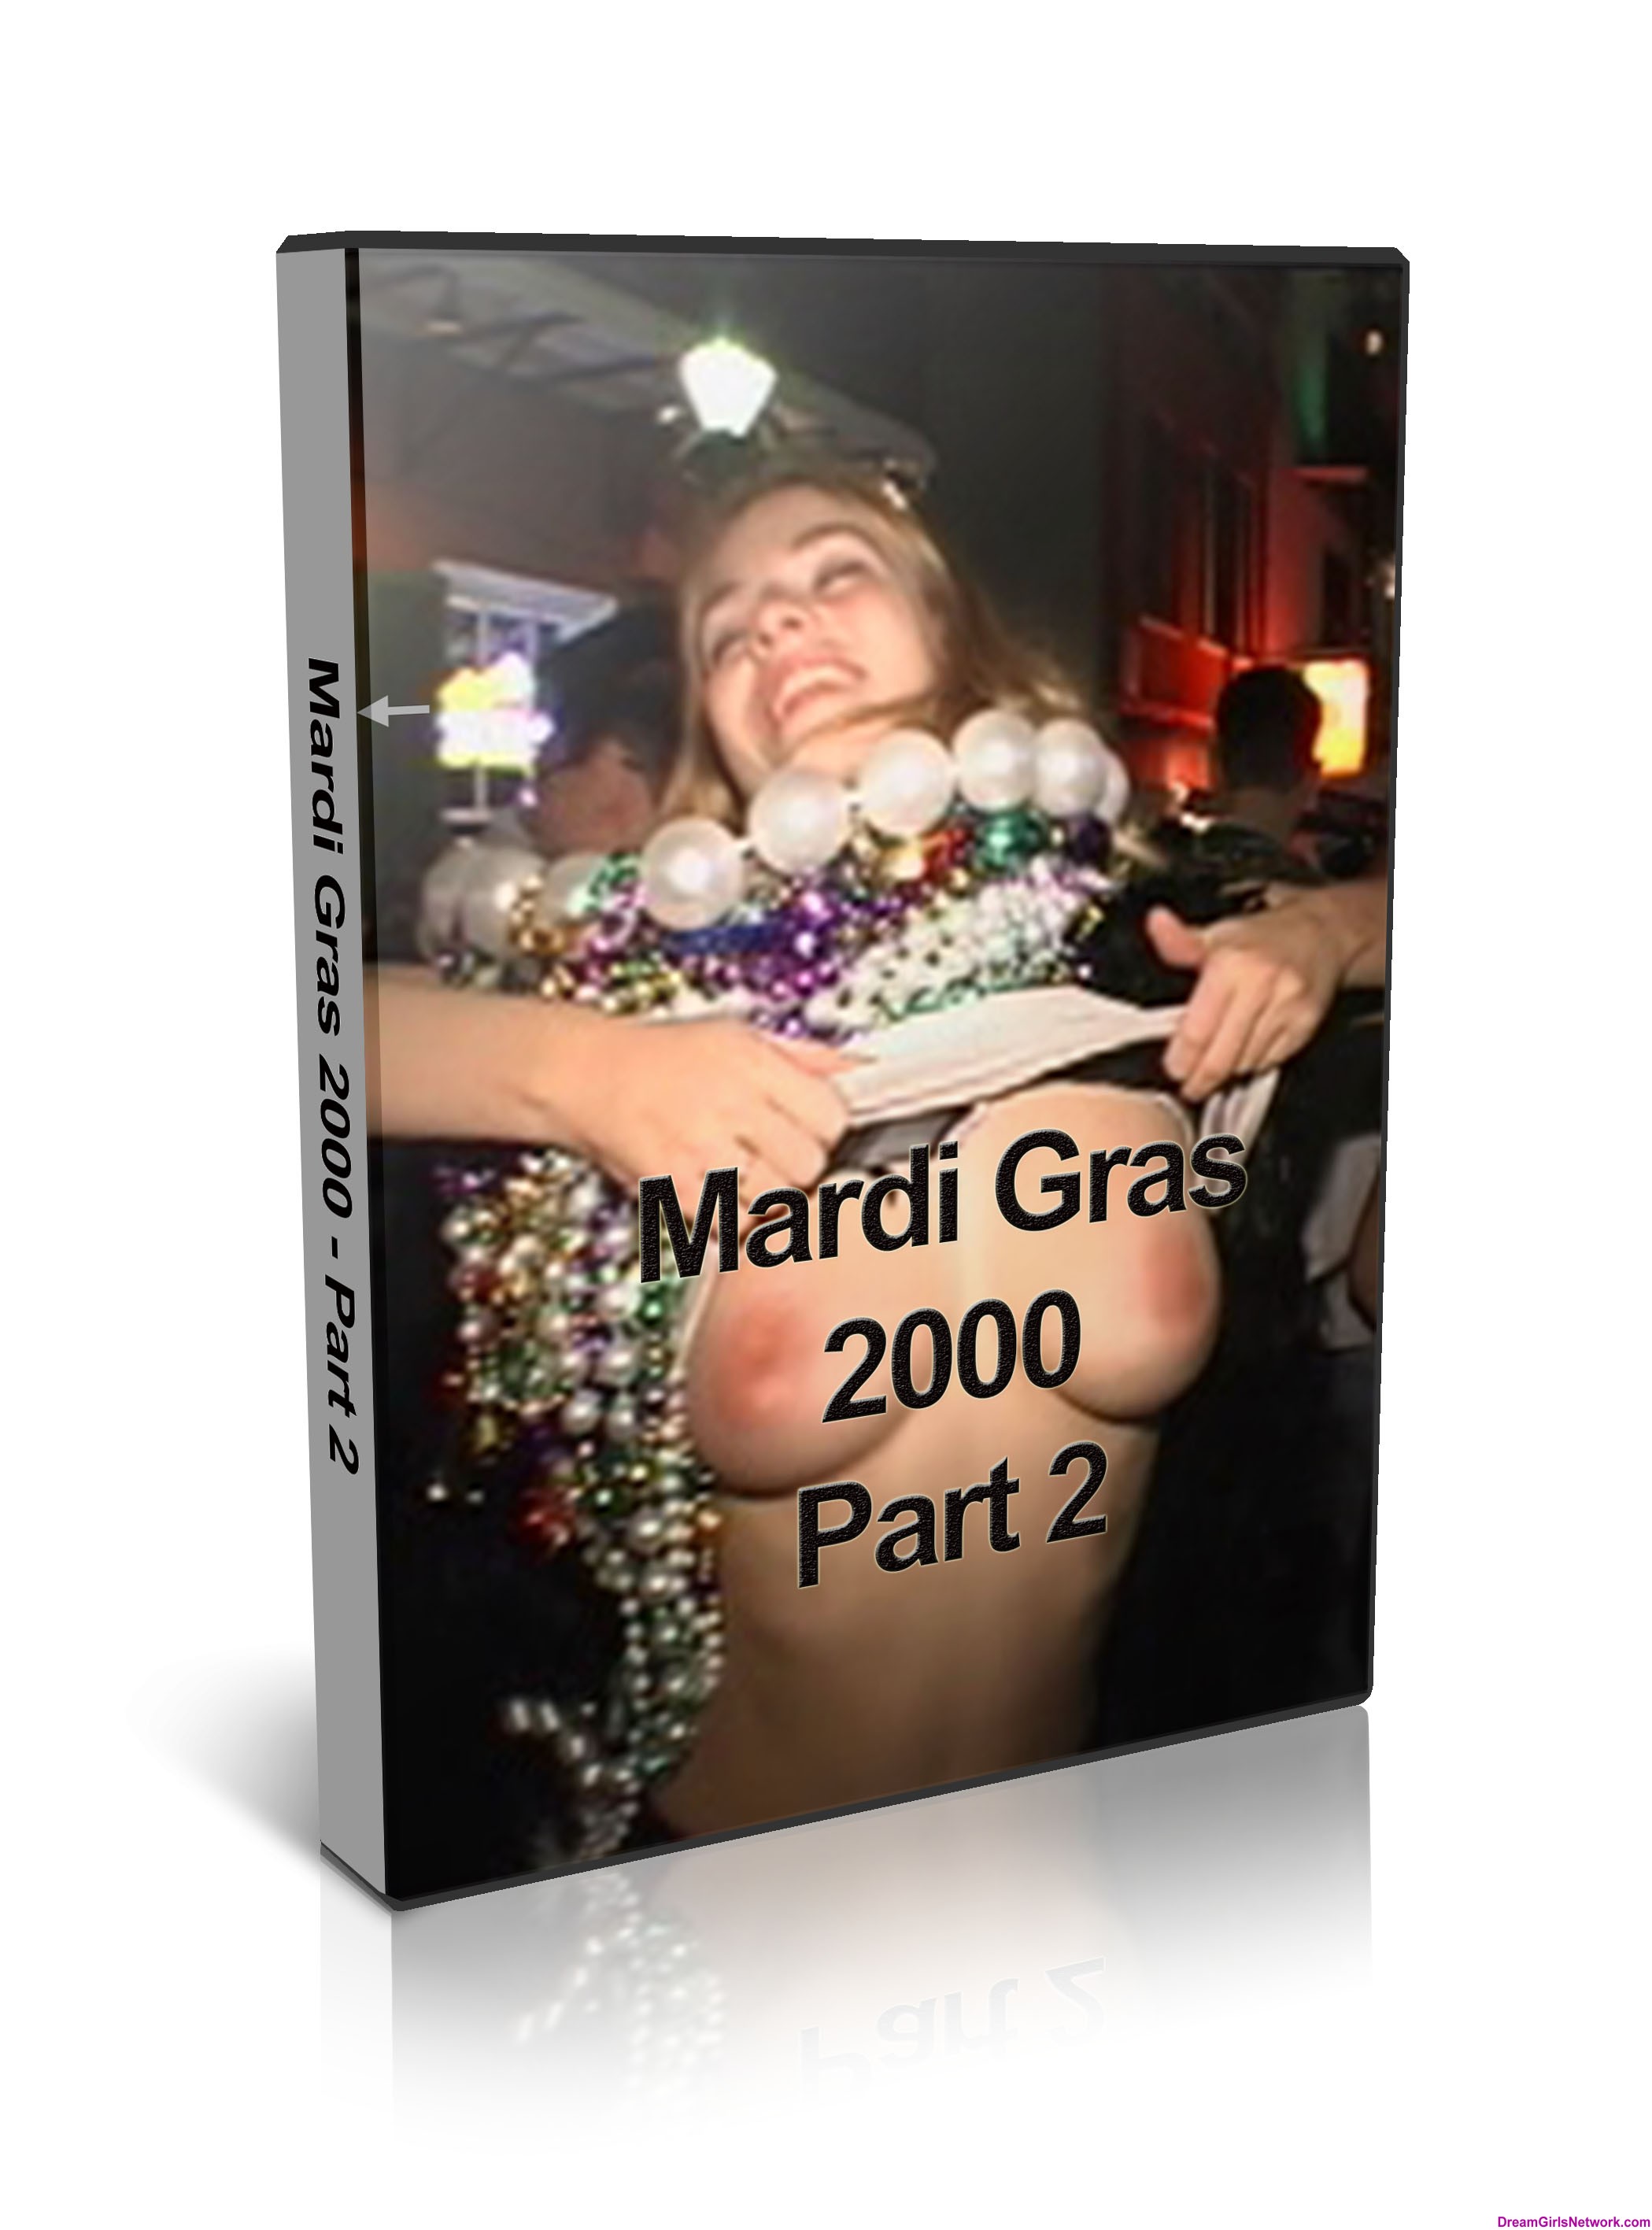 Mardi Gras 2000 Part 2